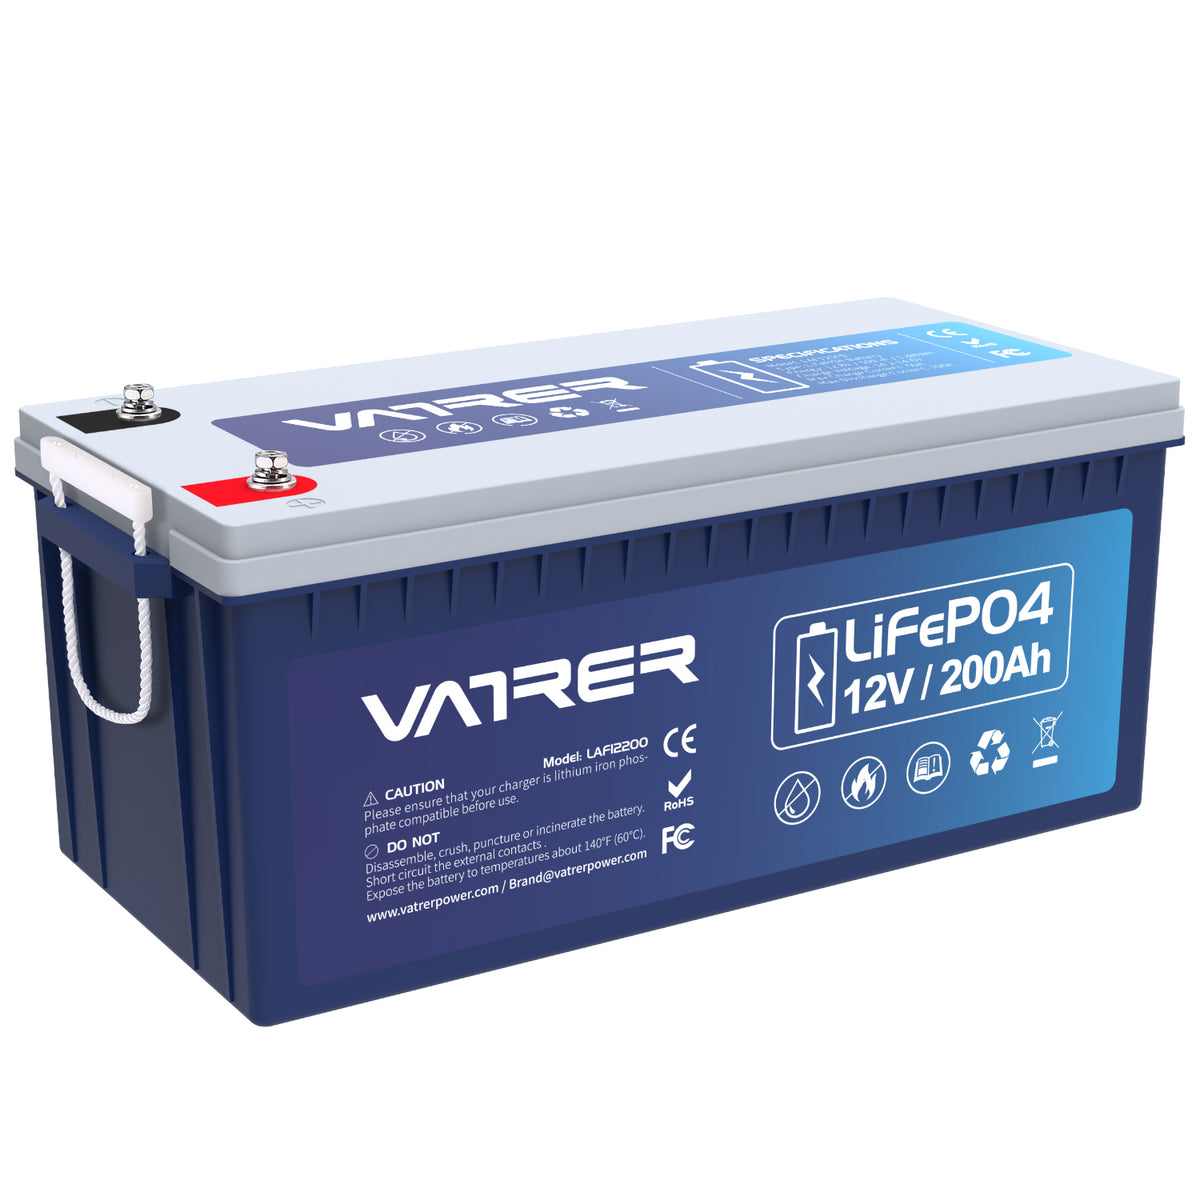 【Pre-order】Vatrer 12V 200Ah Plus 200A BMS Low Temp Cutoff Lithium Battery 11